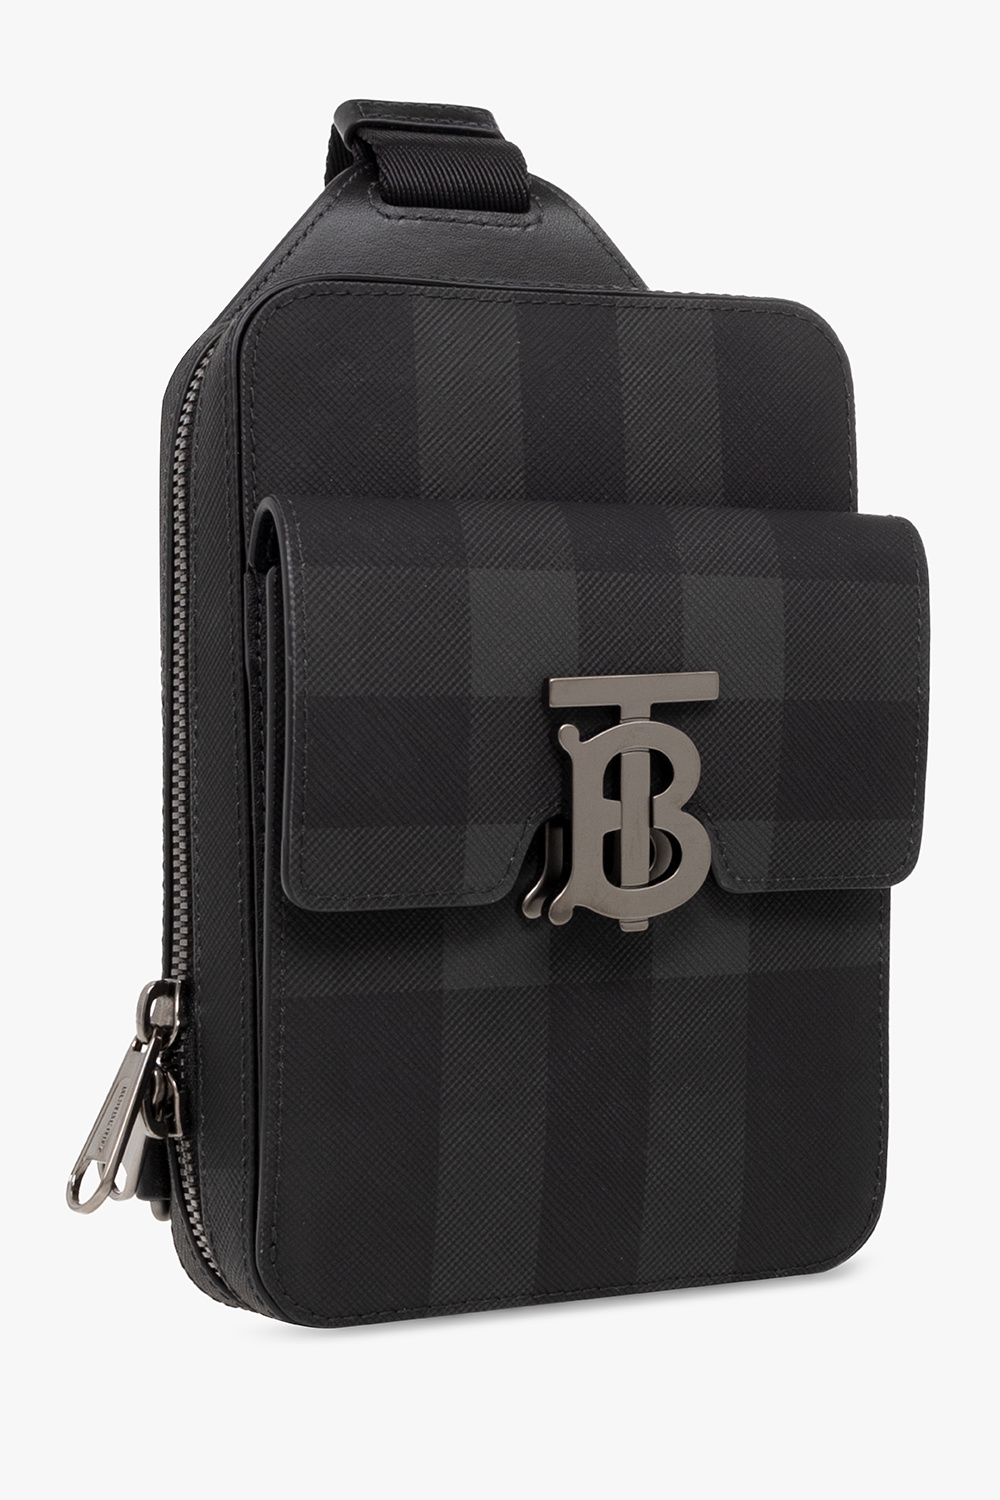 Burberry ‘Theo’ shoulder bag